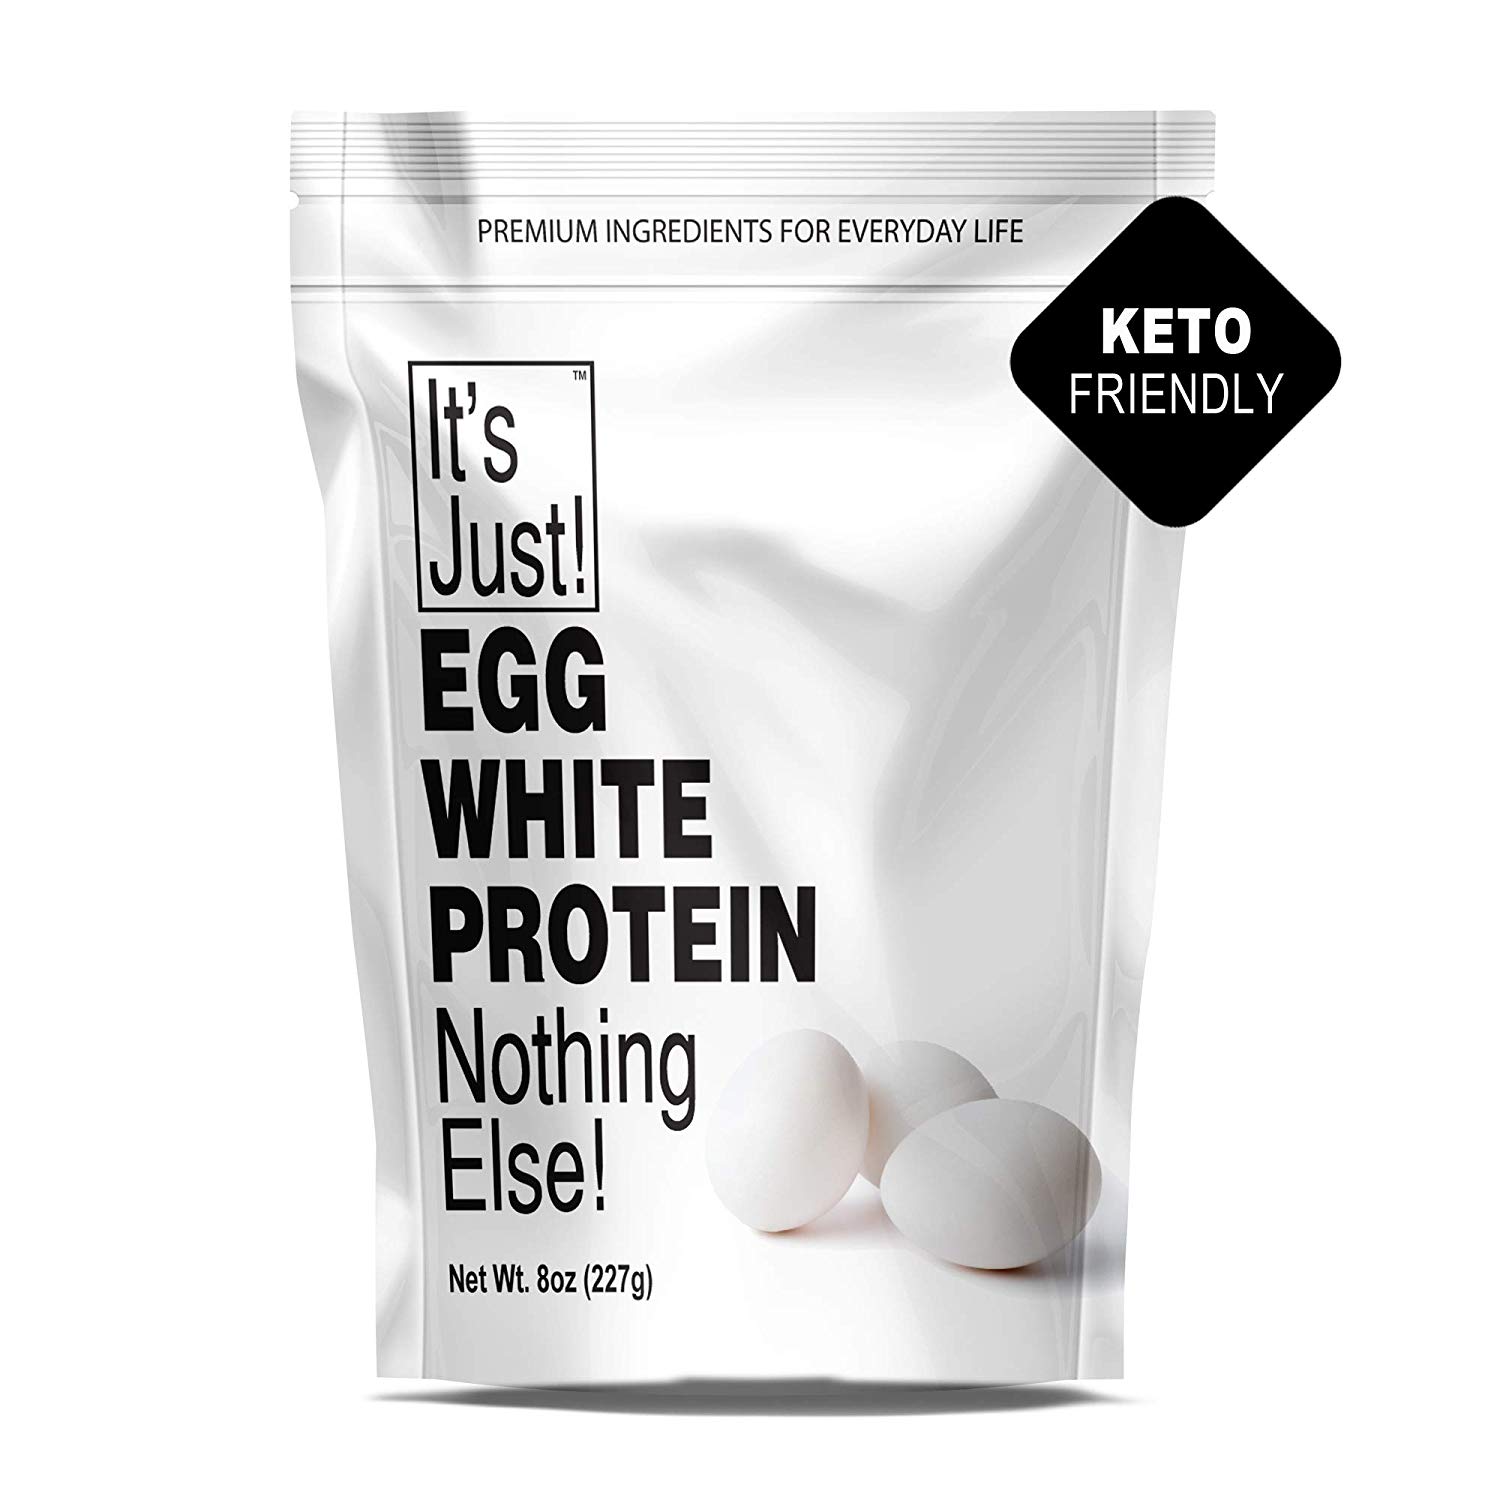 It’s Just!—Egg White Protein Powder